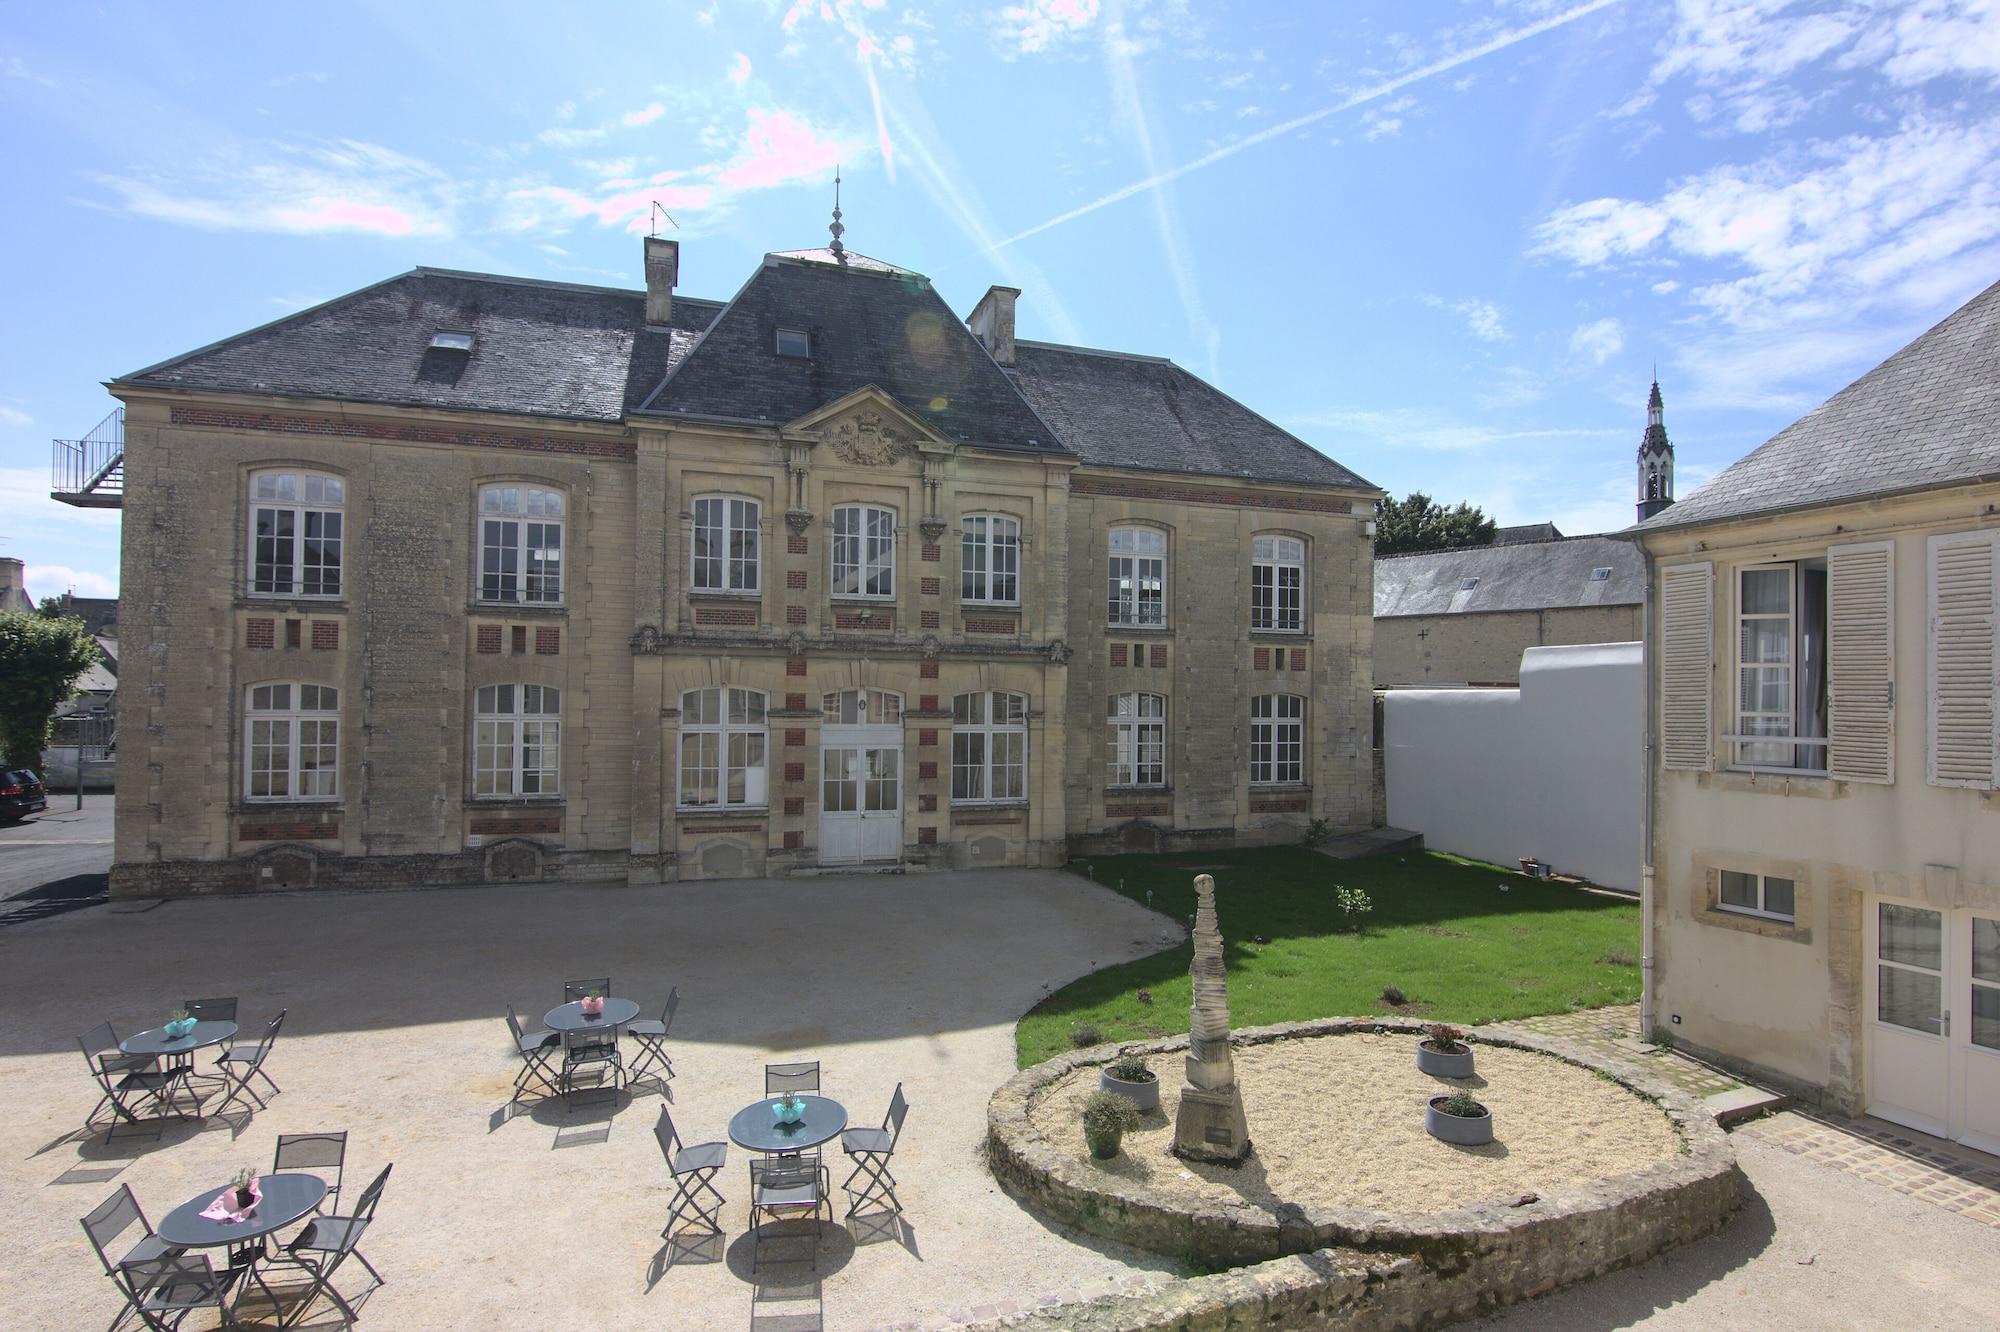 Hotel Le Bayeux Exterior photo